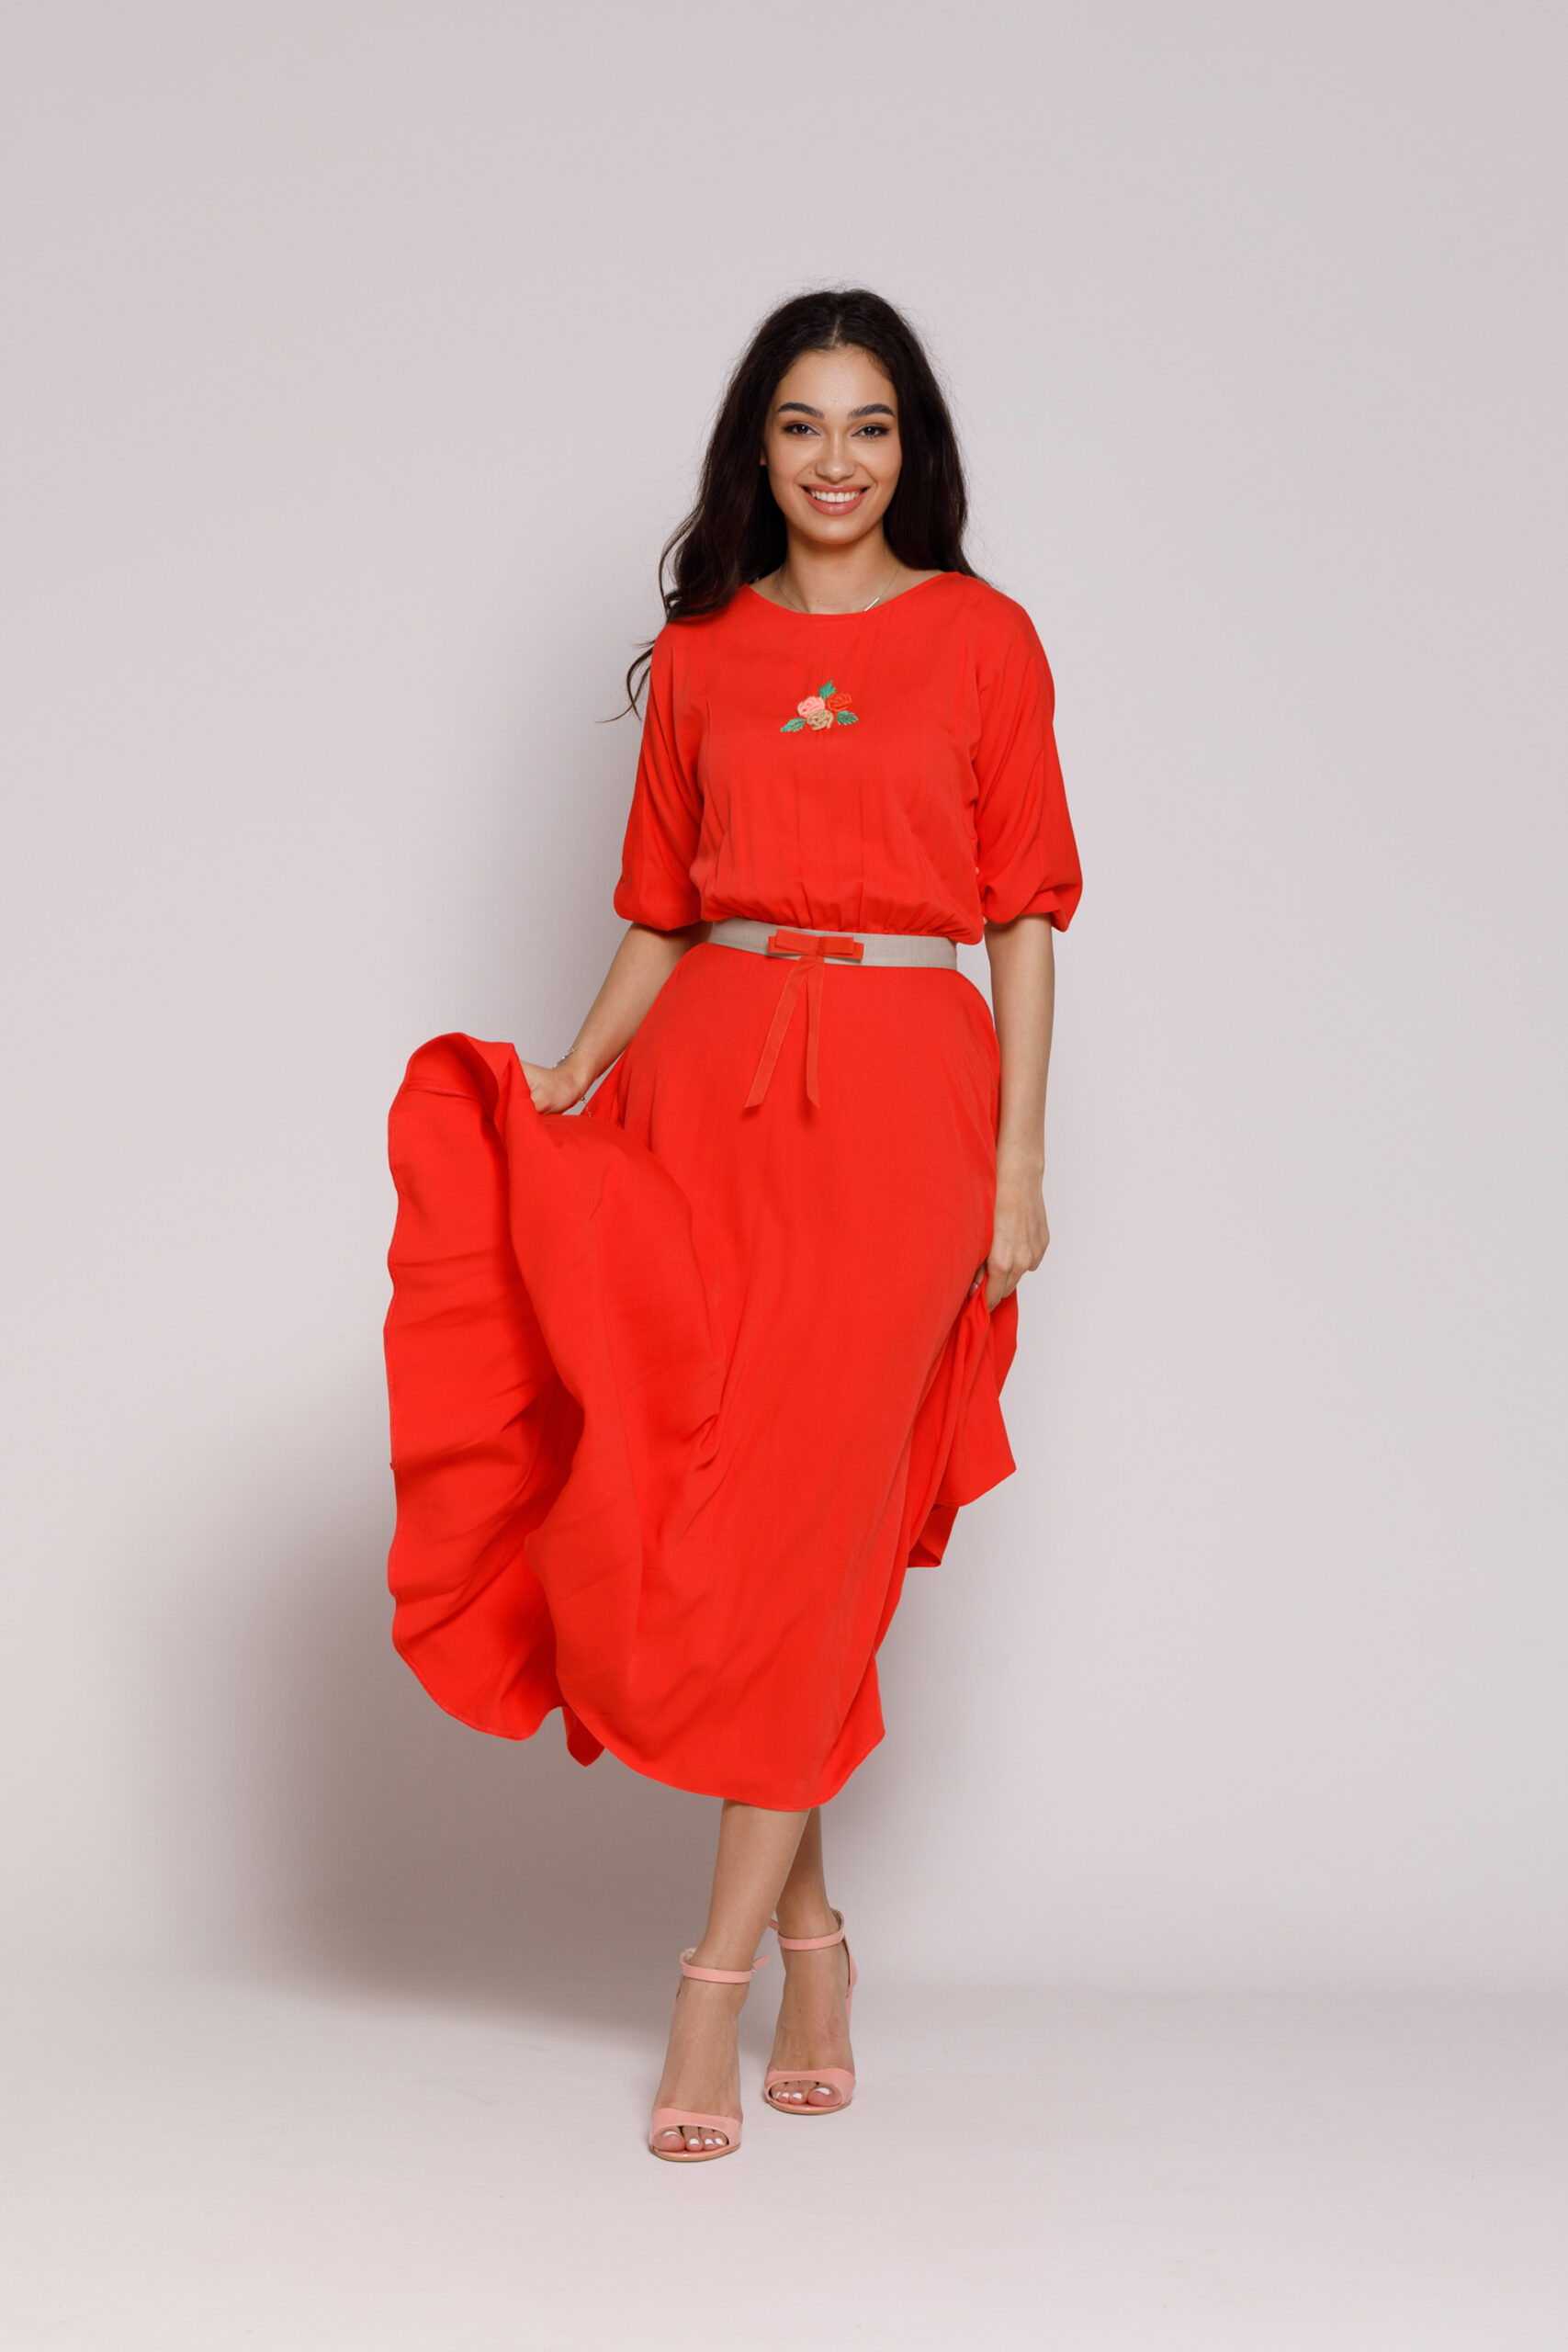 ELKA casual red viscose dress. Natural fabrics, original design, handmade embroidery